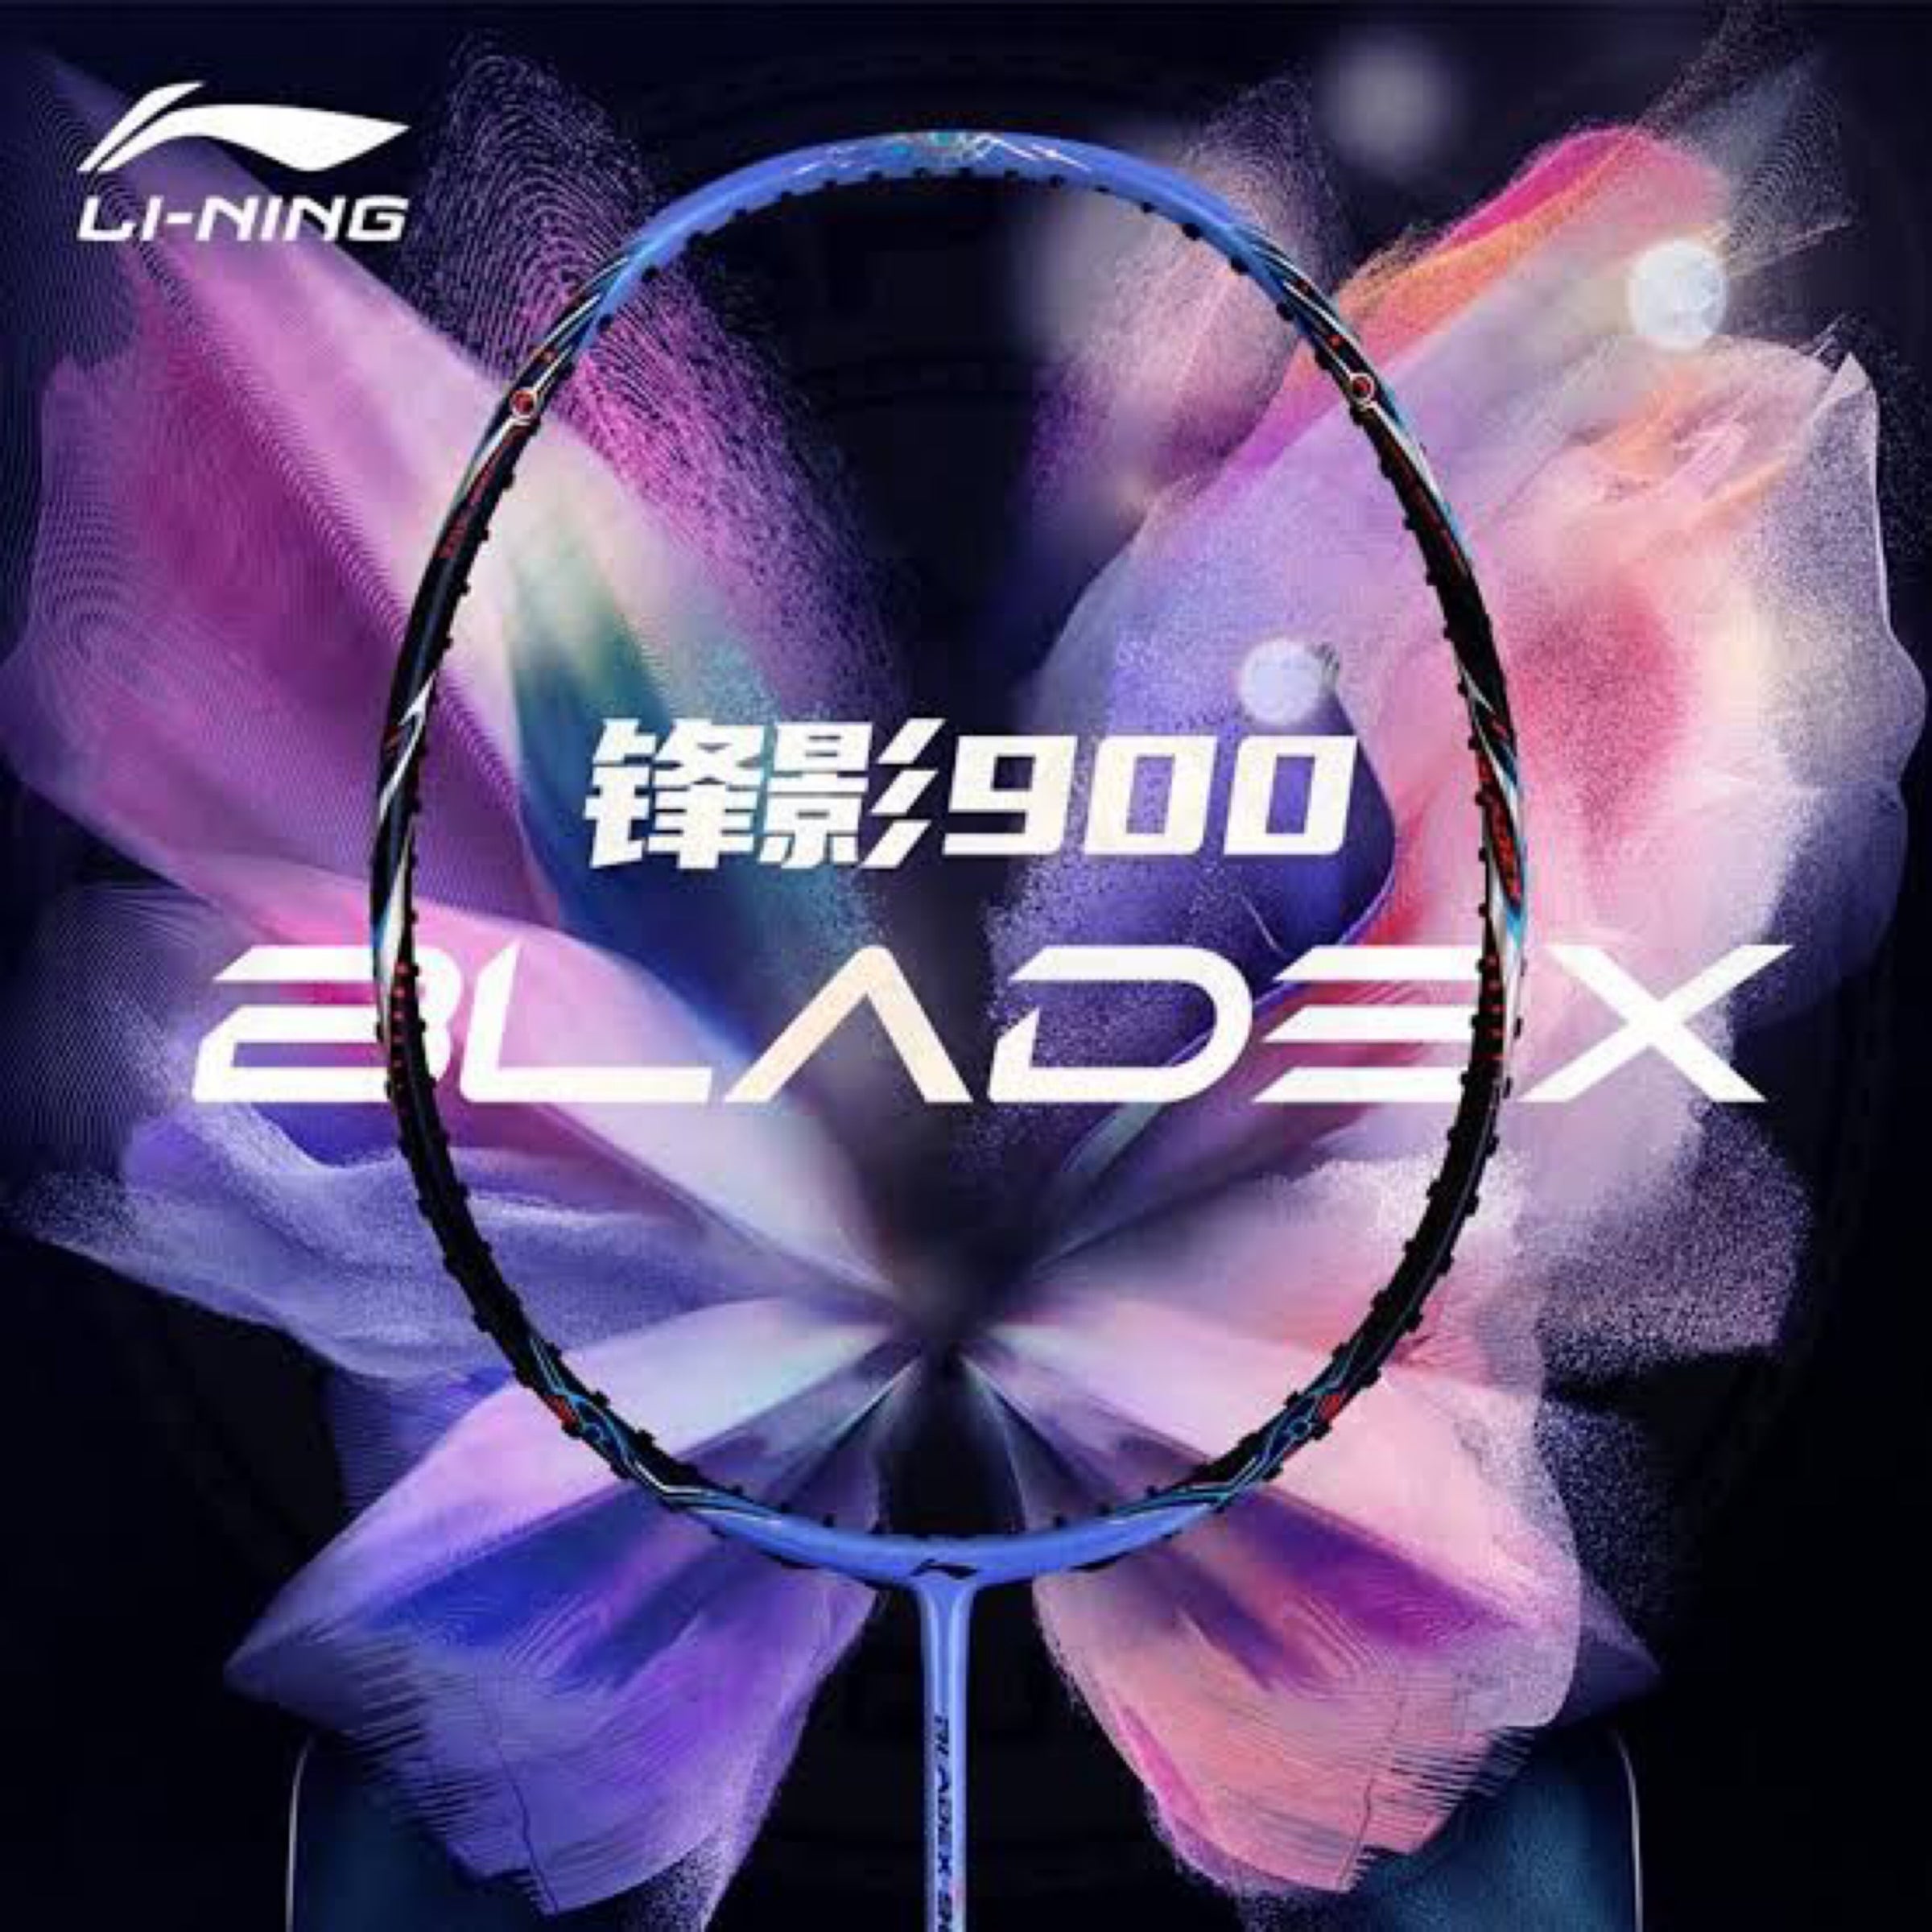 Li-Ning BladeX 900 Moon Max Set 4UG6 (Frame Only) | BadmintonMart